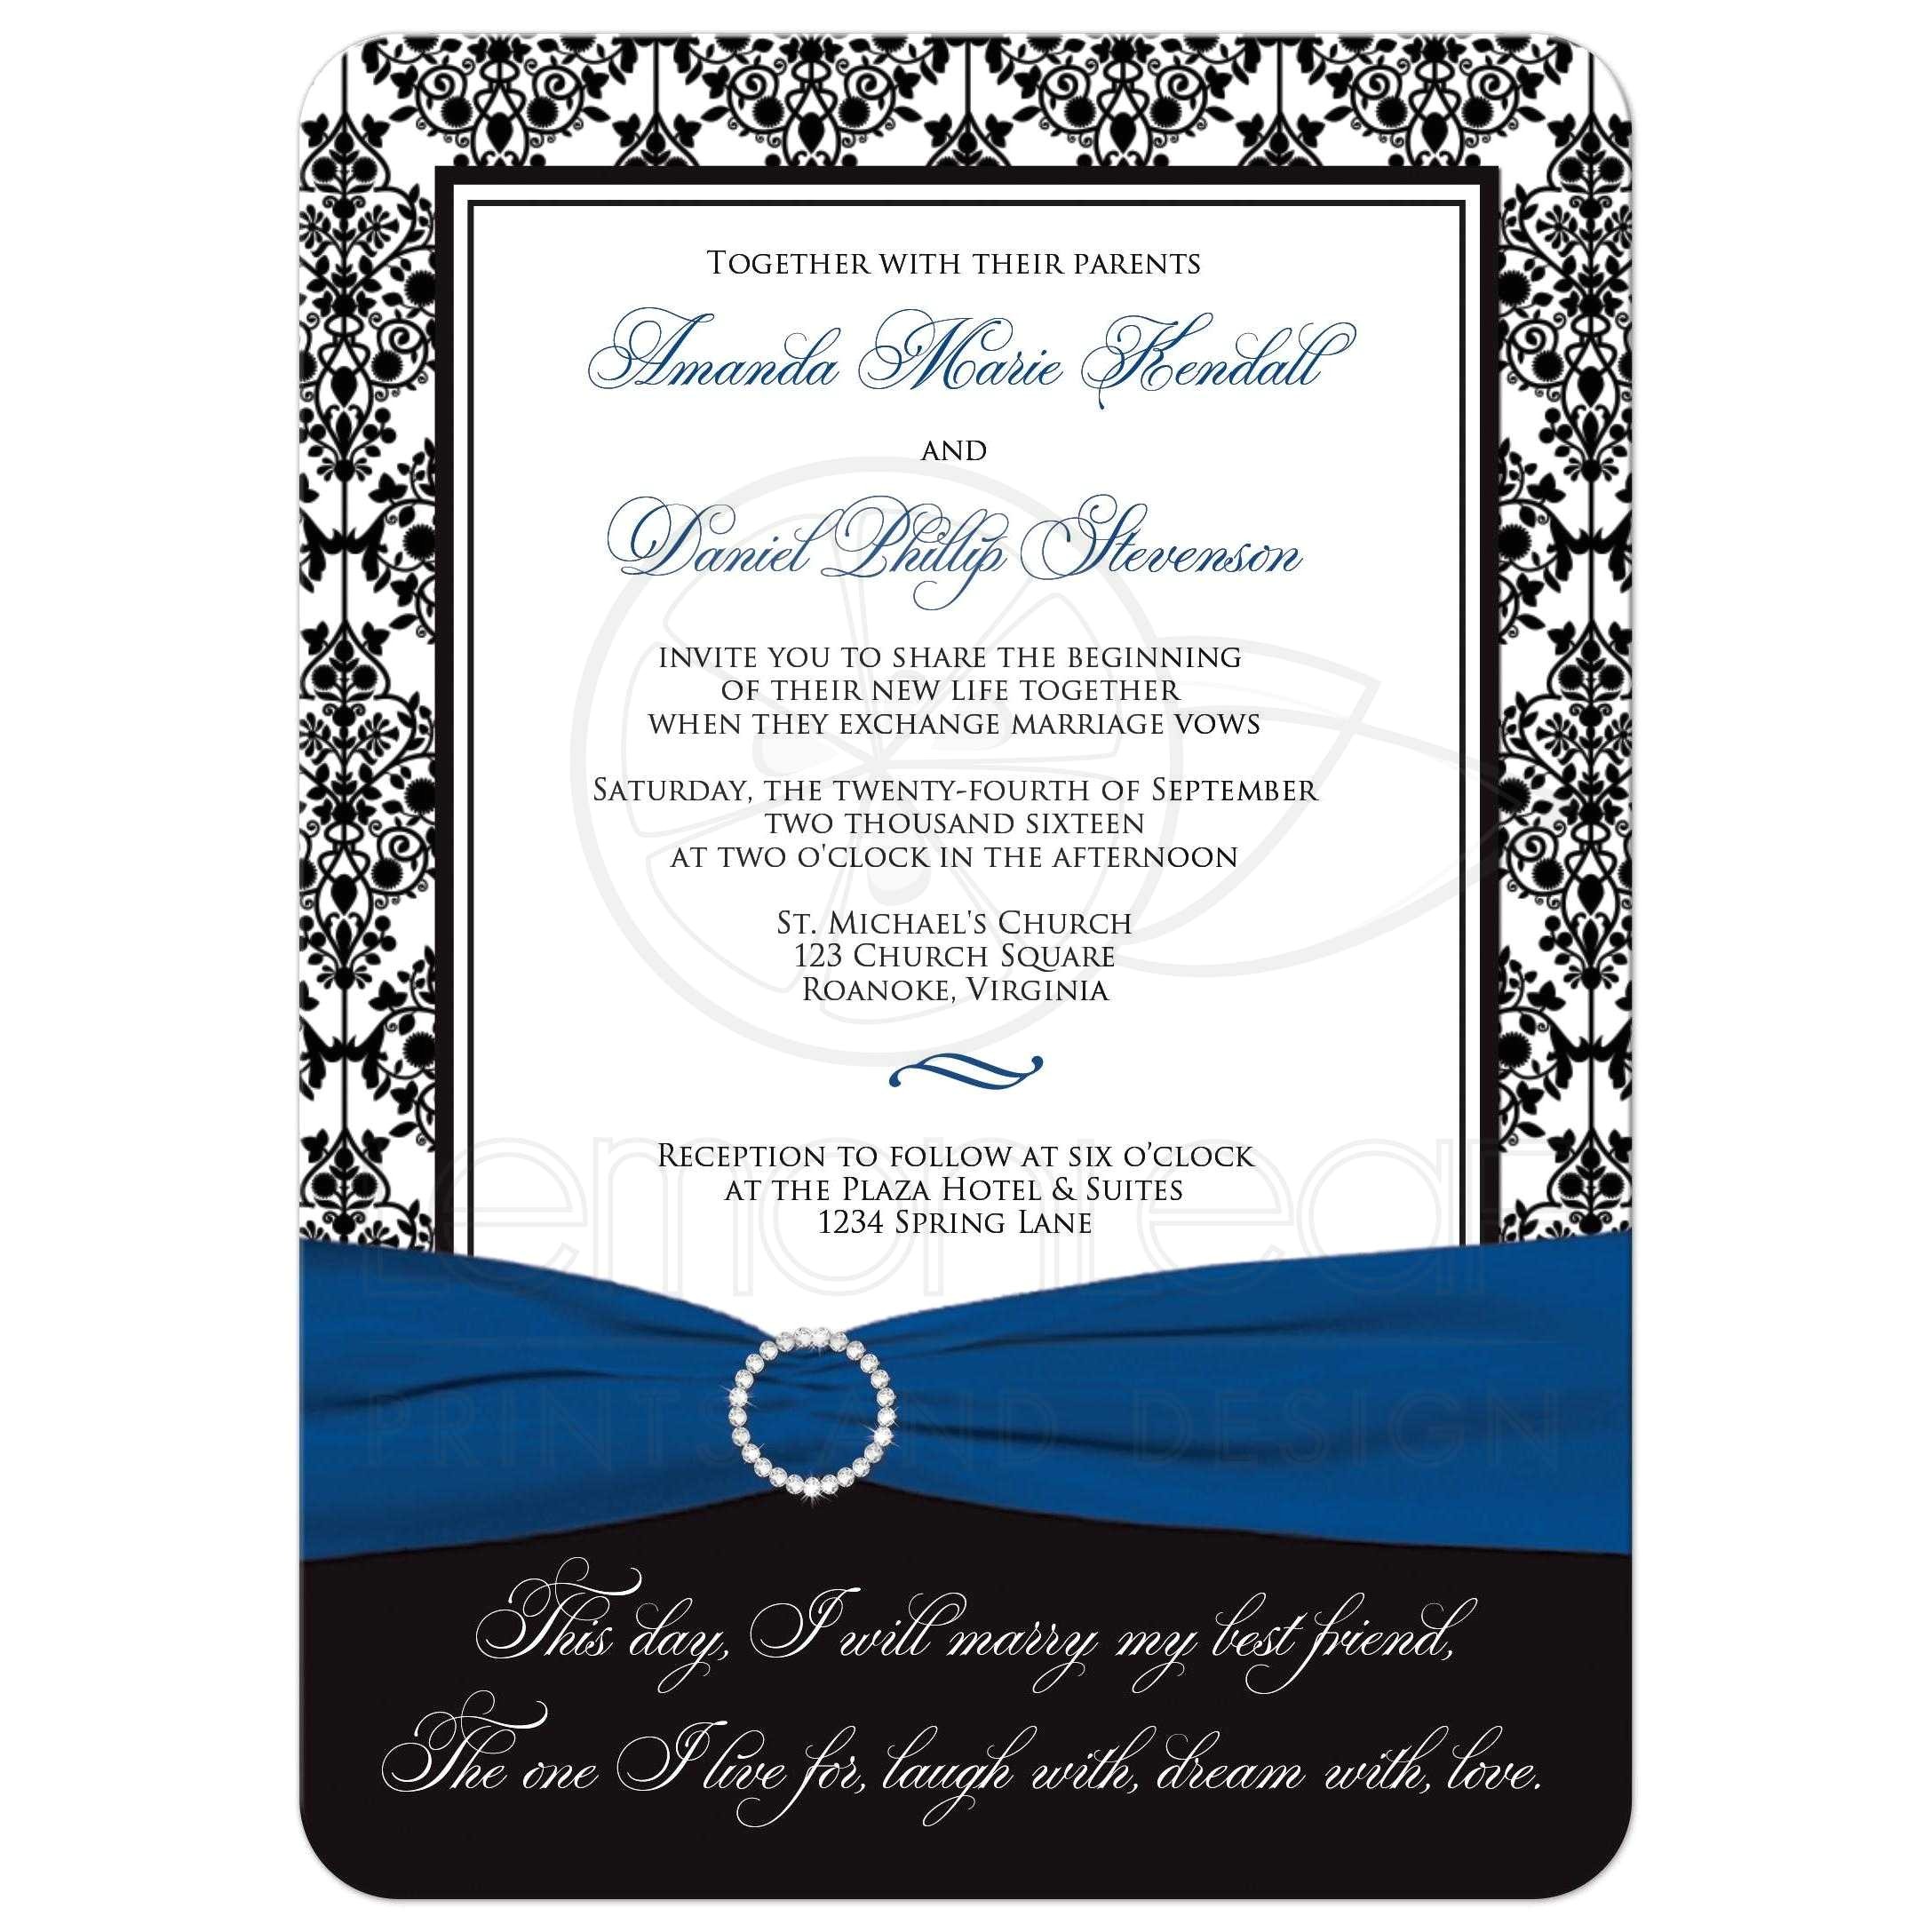 Royal Blue and Black Wedding Invitations Wedding Invitation Black White Damask Printed Royal